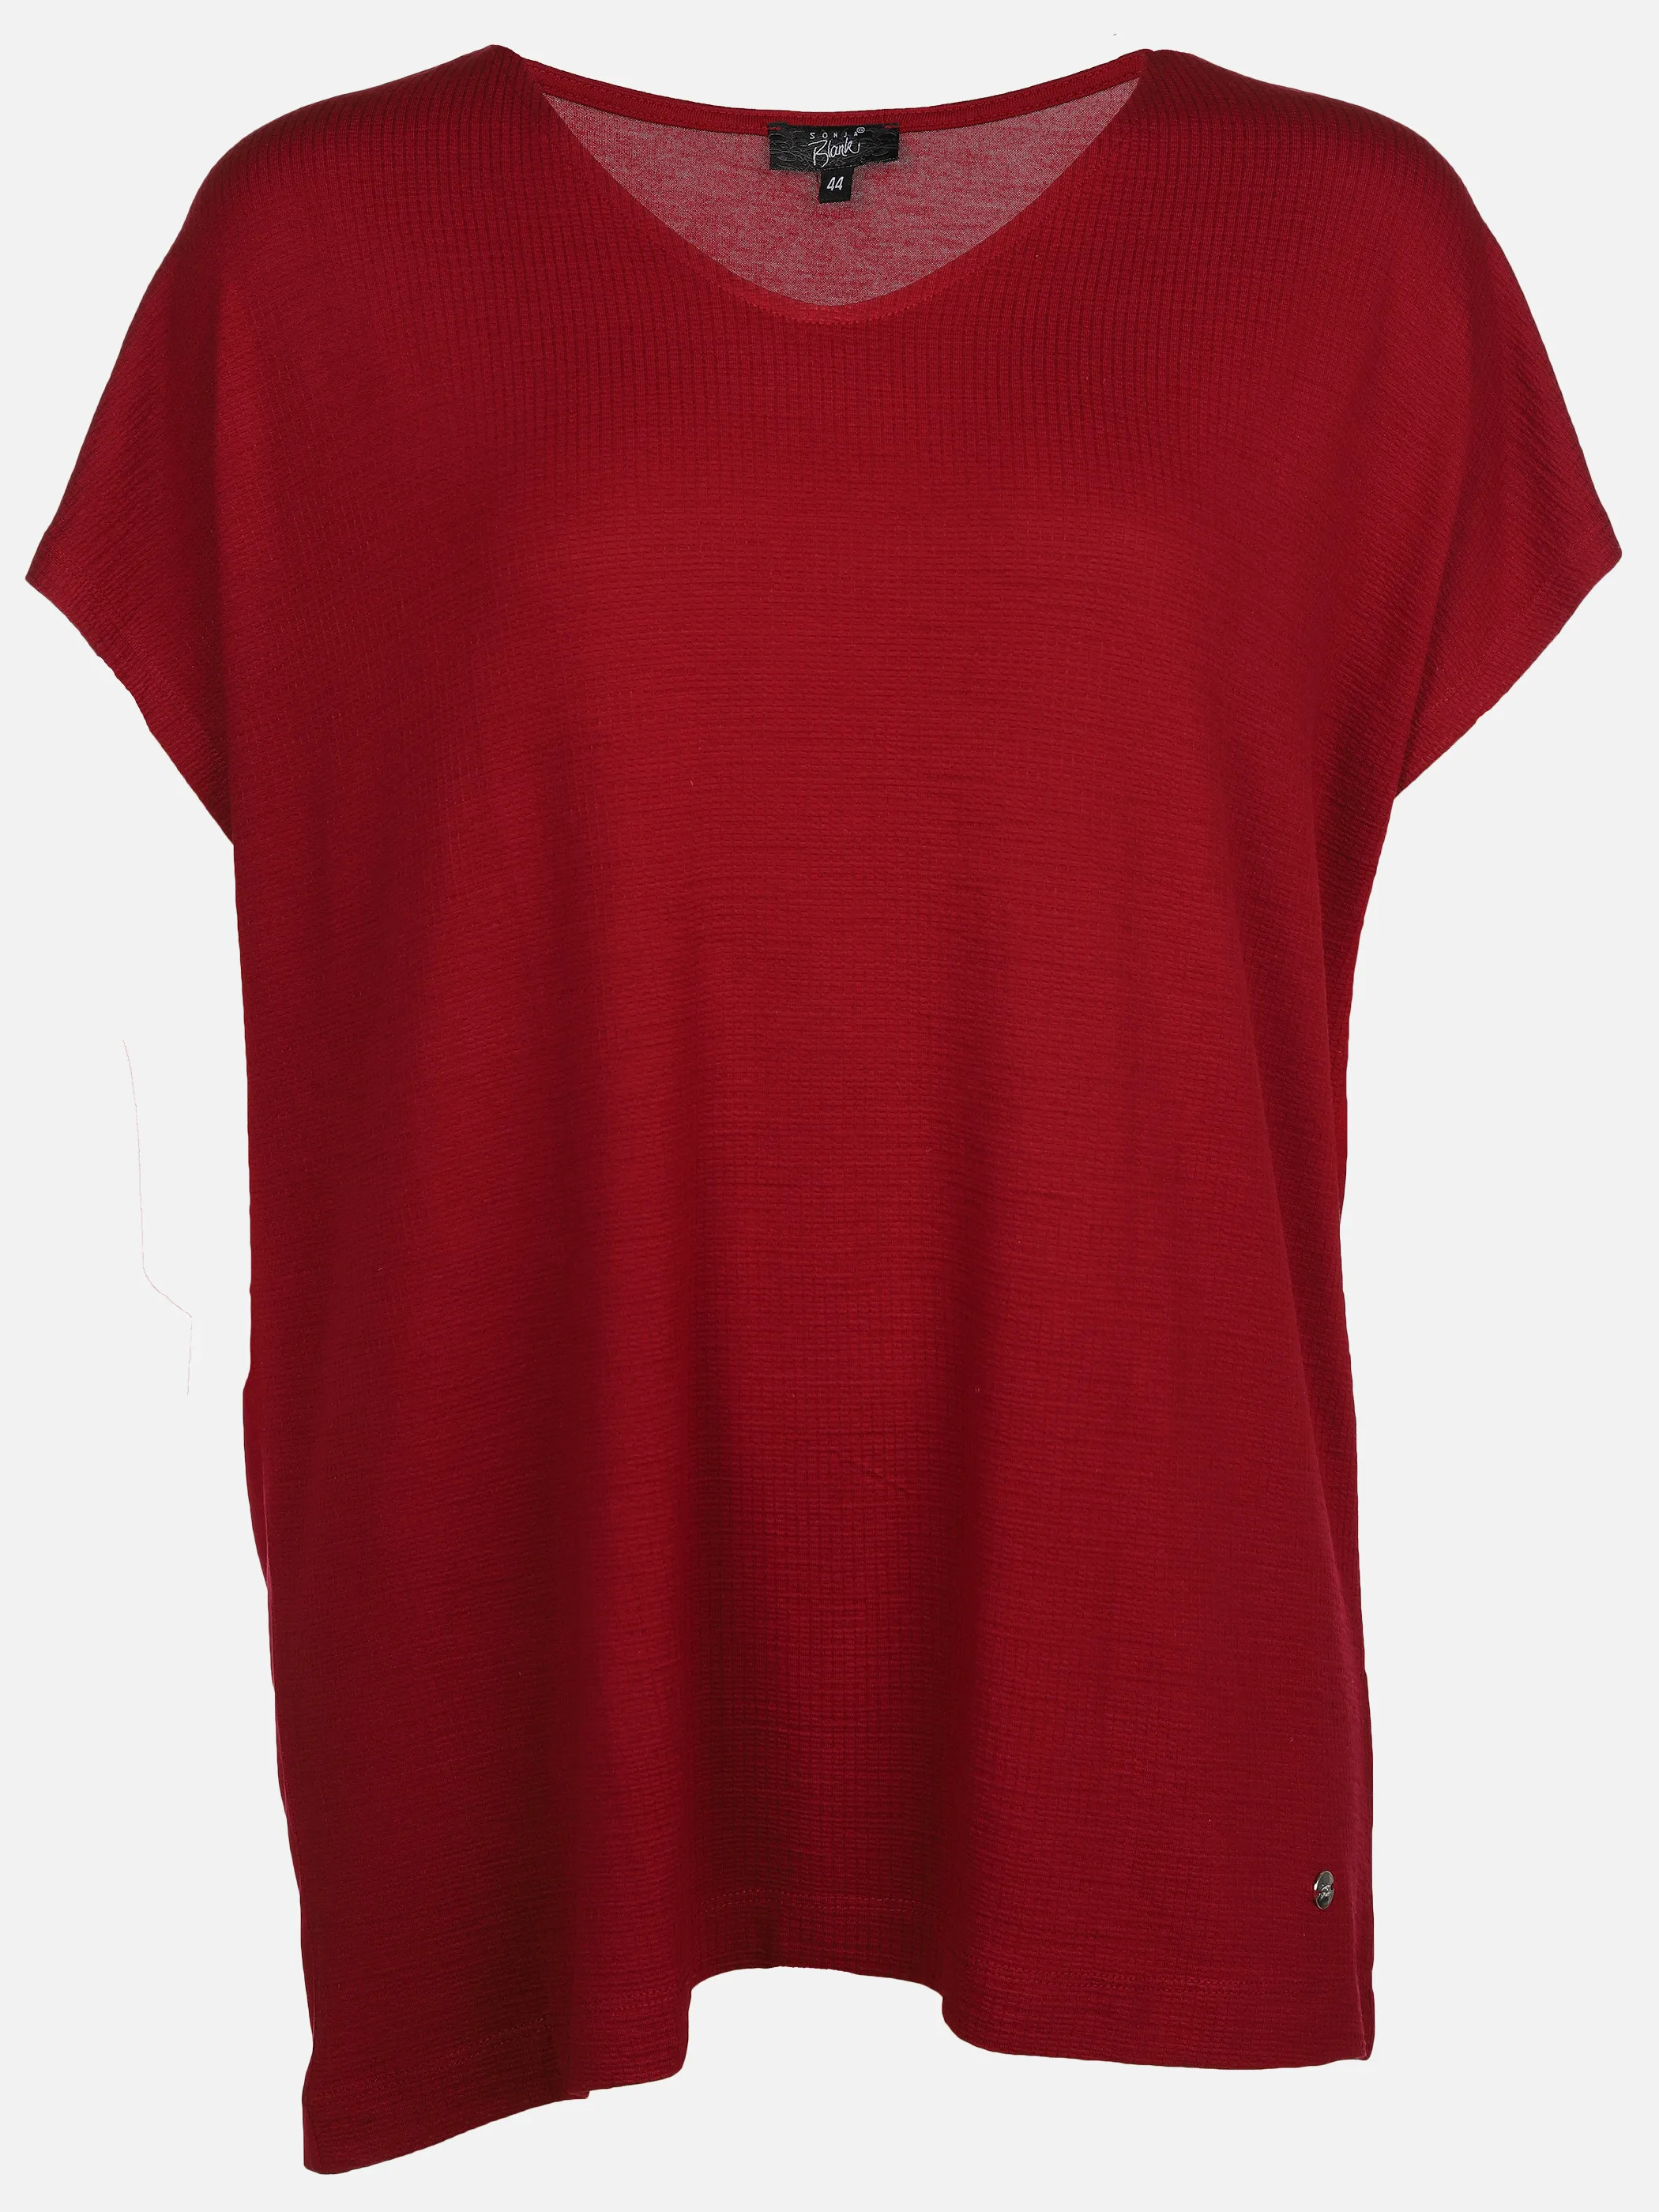 Sonja Blank Da-gr.Gr. T-Shirt V-Ausschnitt Rot 890338 BAROLO 1